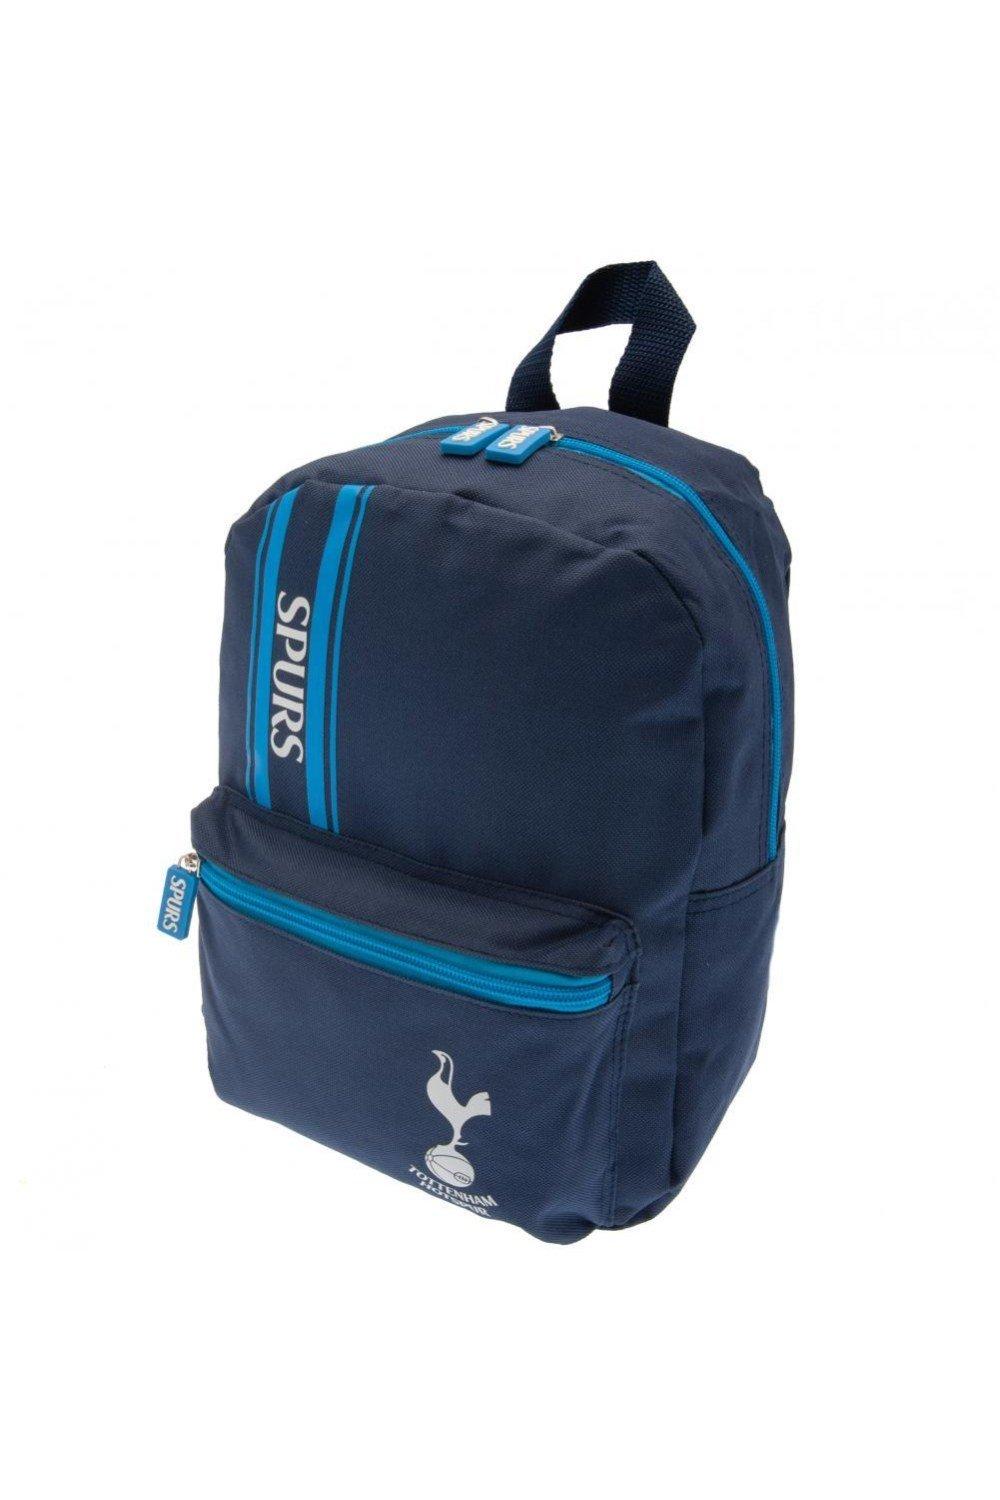 Рюкзак «Шпоры» Tottenham Hotspur FC, темно-синий флэш рюкзак tottenham hotspur fc темно синий